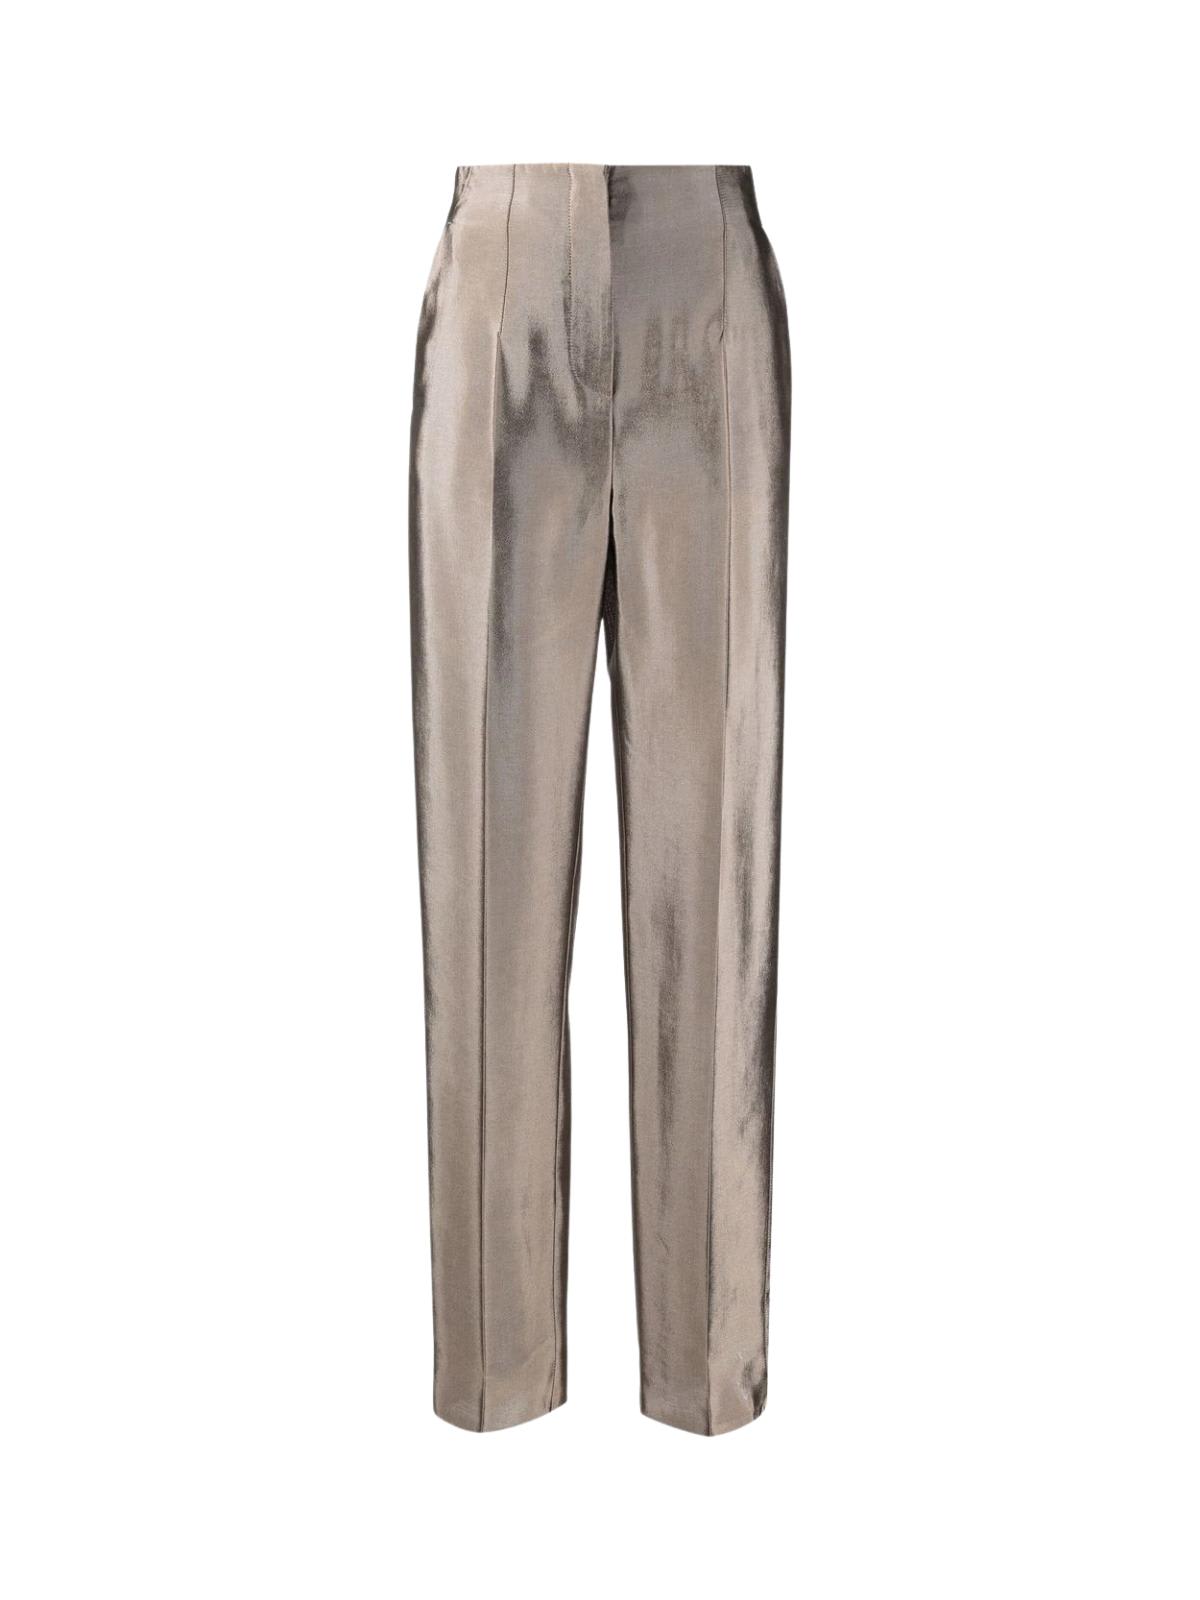 Giorgio Armani Suit Pants